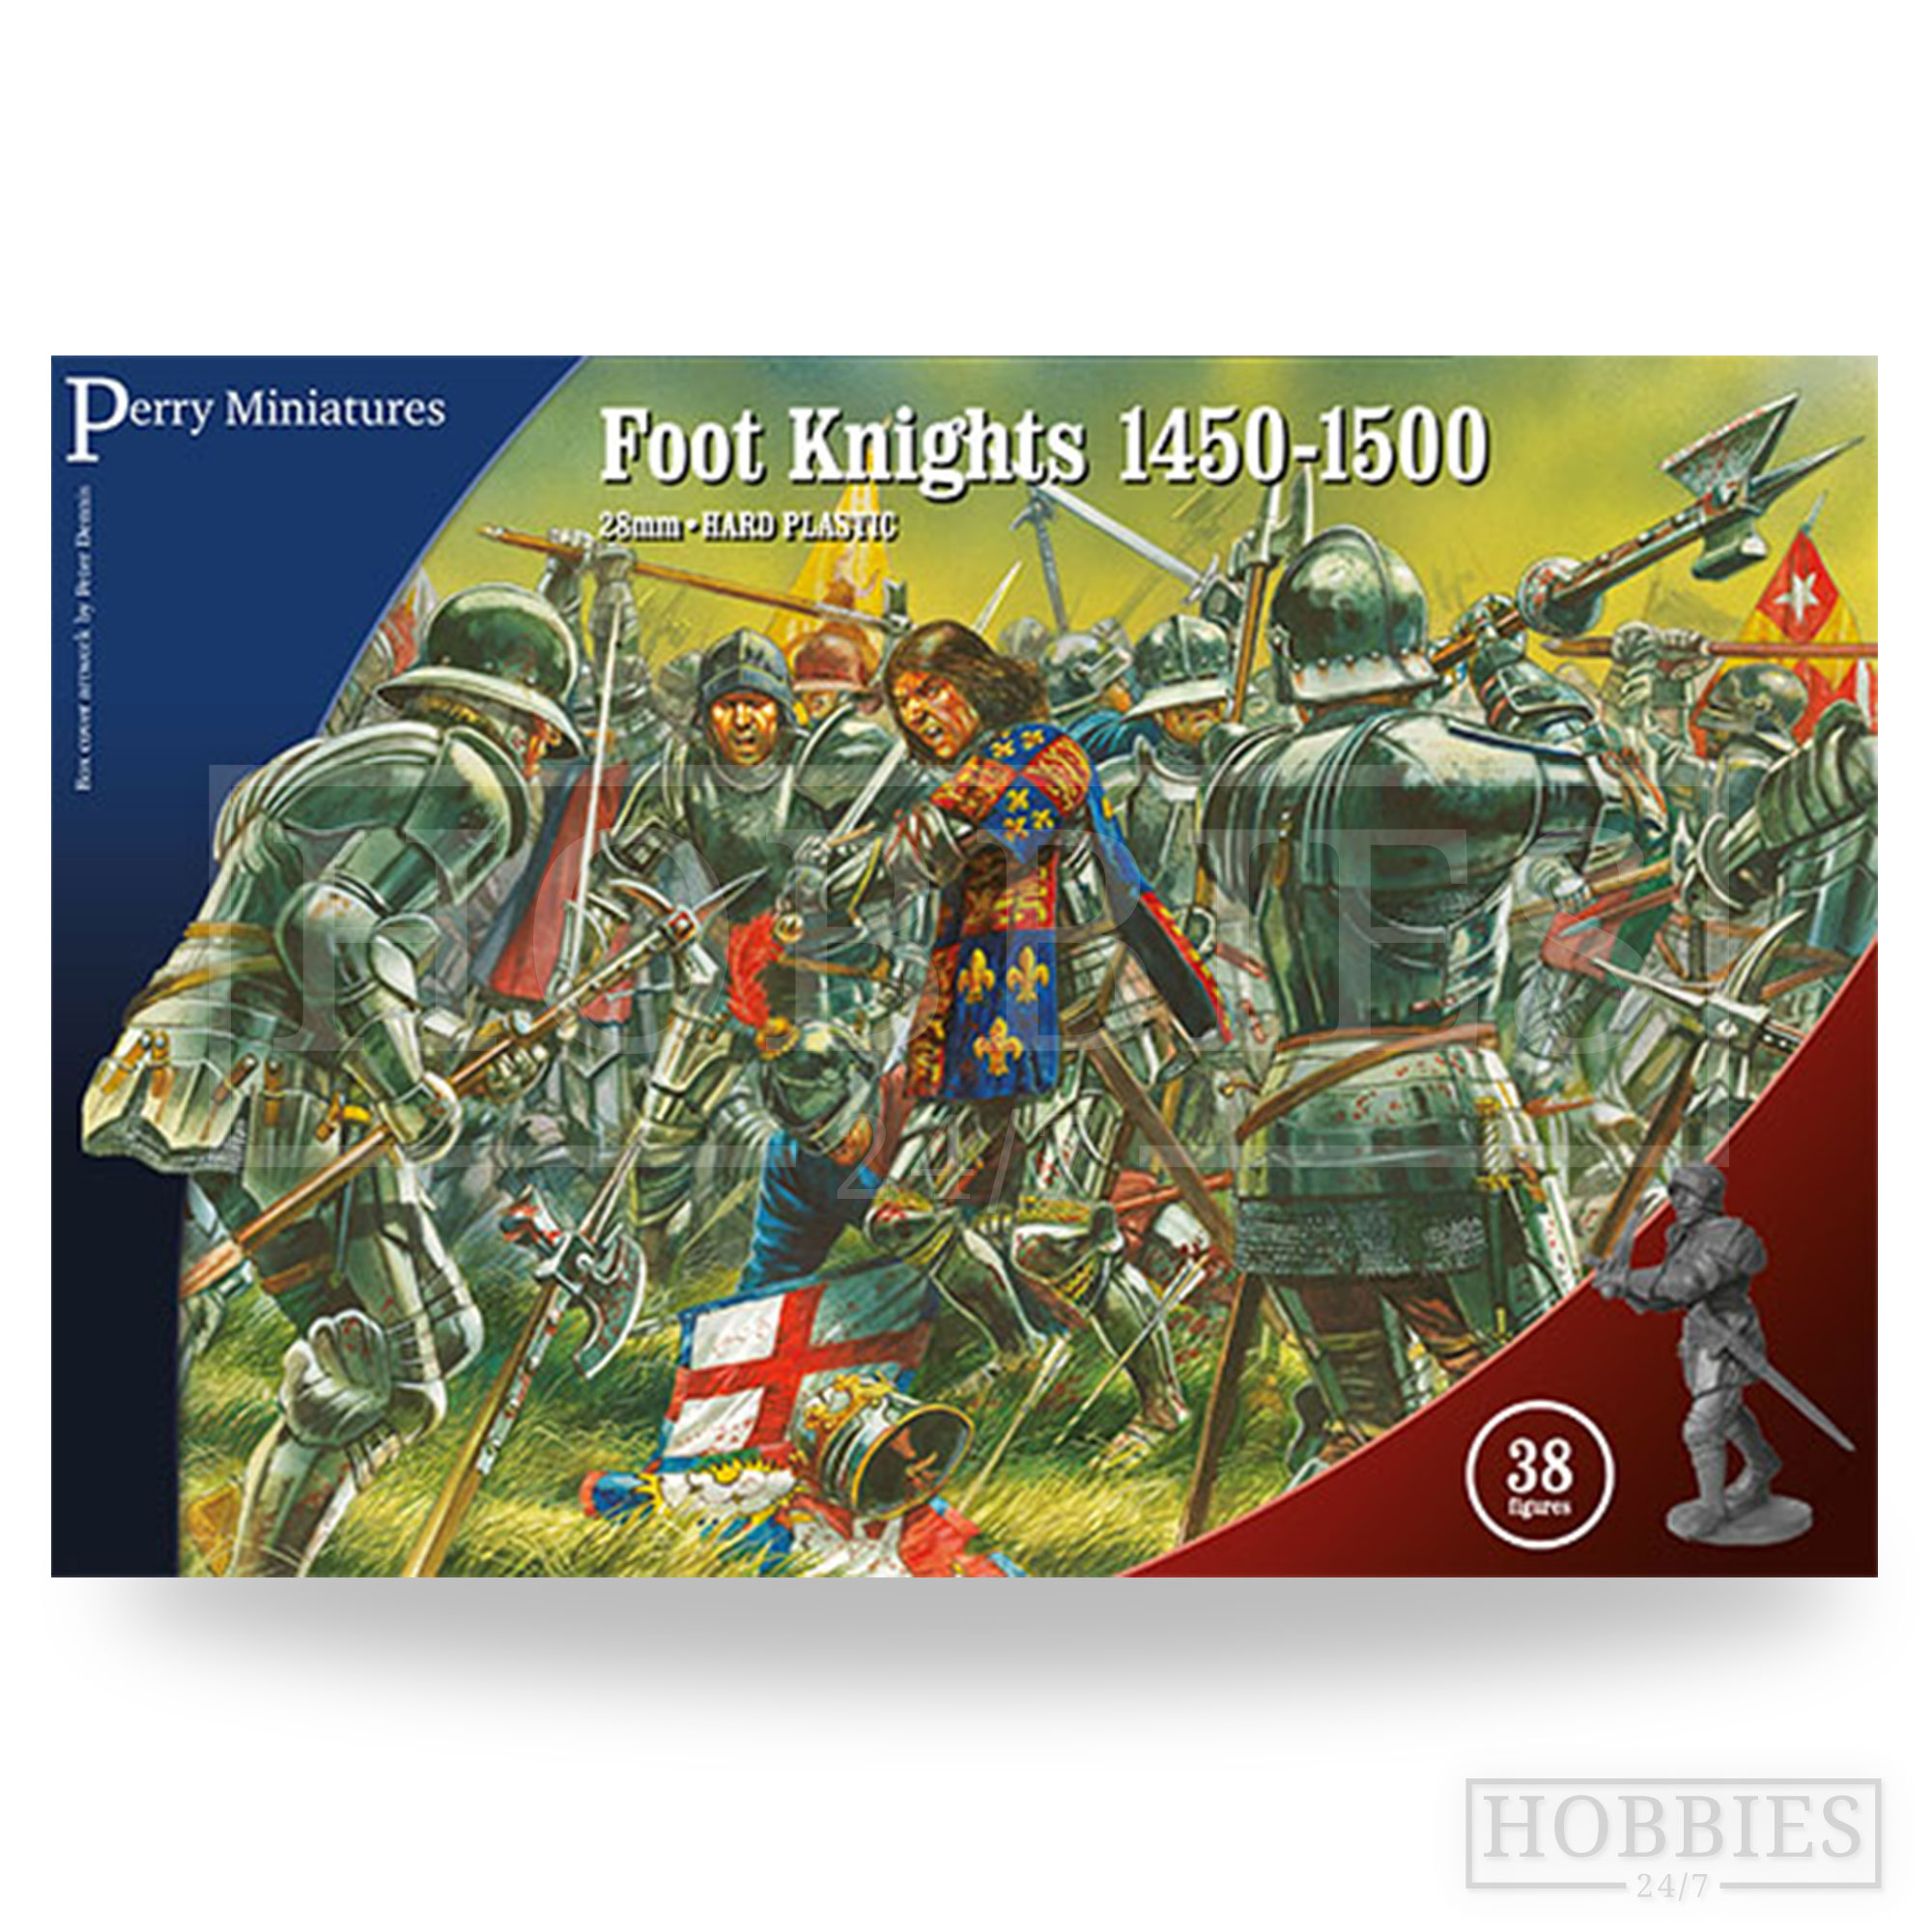 Perry Miniatures Foot Knights 1450-1500 28mm Figures - Hobbies247 Online  Model Shop